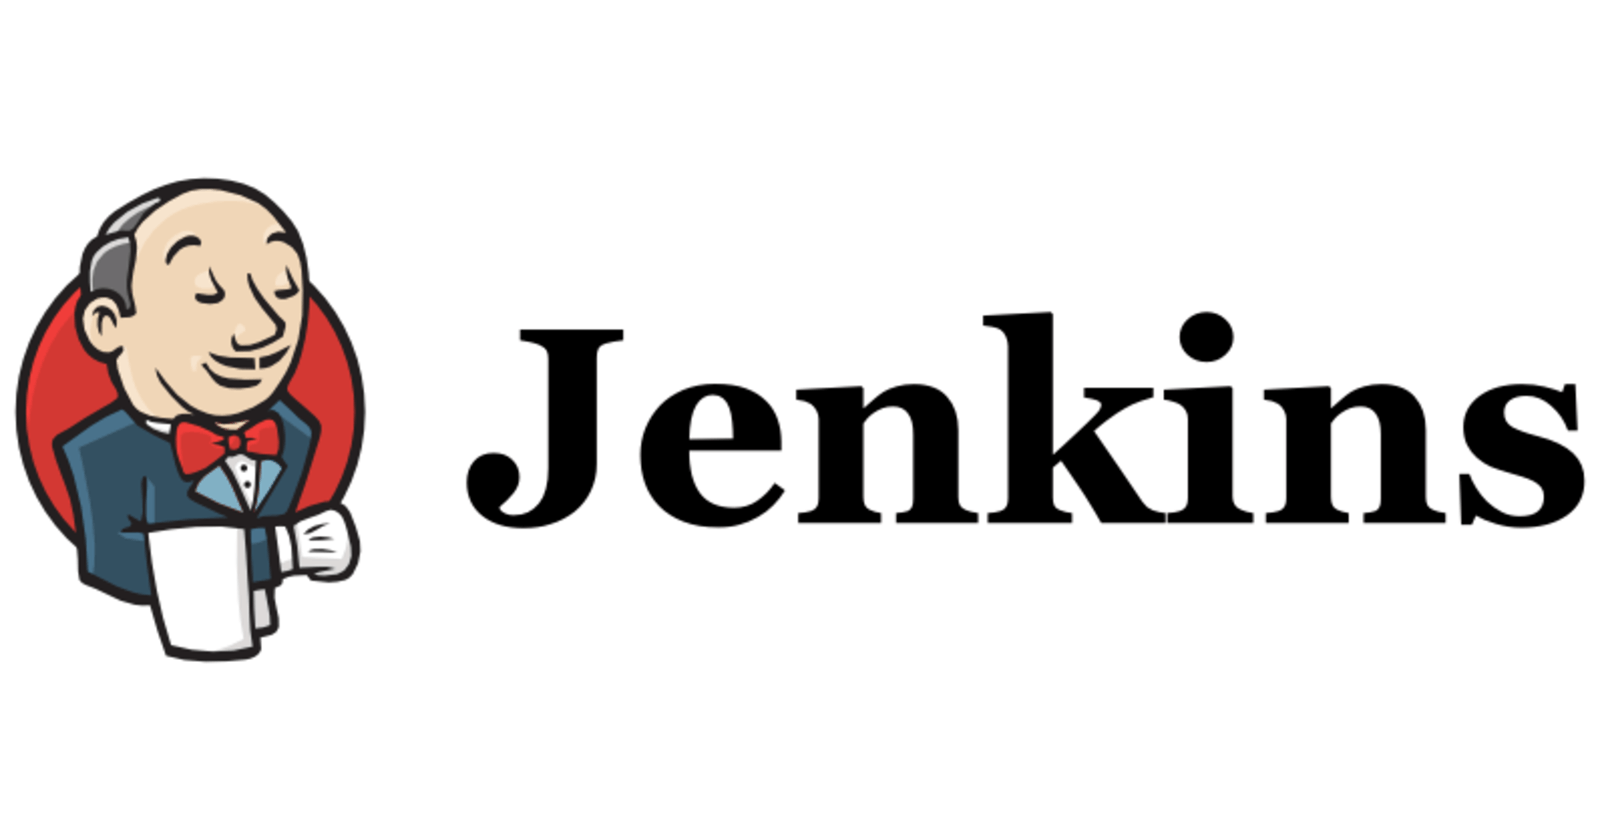 How to run Jenkins in docker container on Ubuntu 18.04